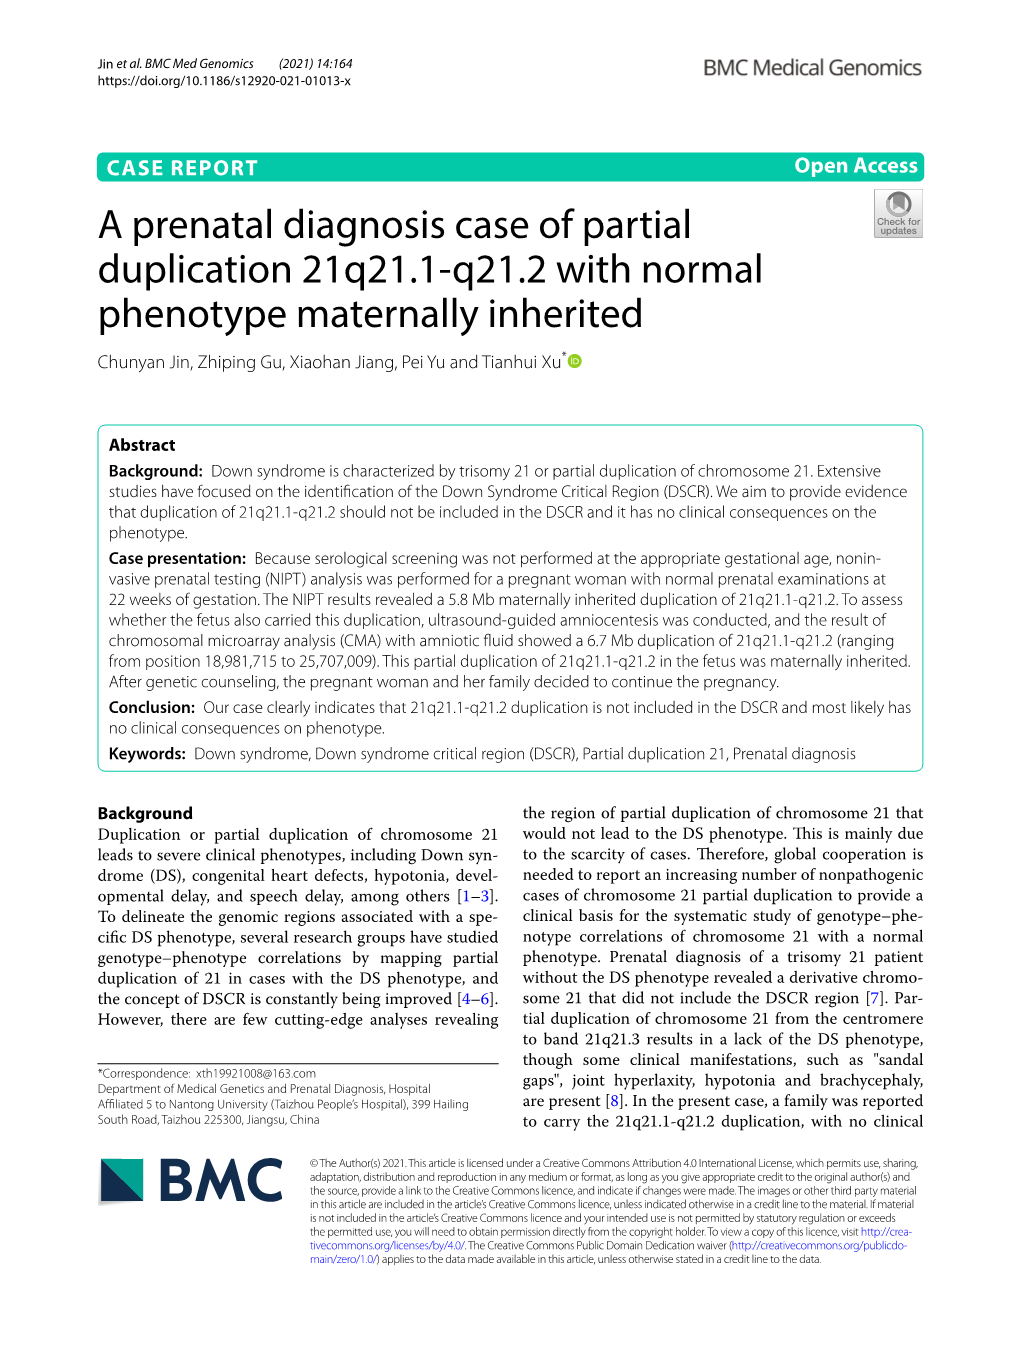 A Prenatal Diagnosis Case of Partial Duplication 21Q21.1-Q21.2 With